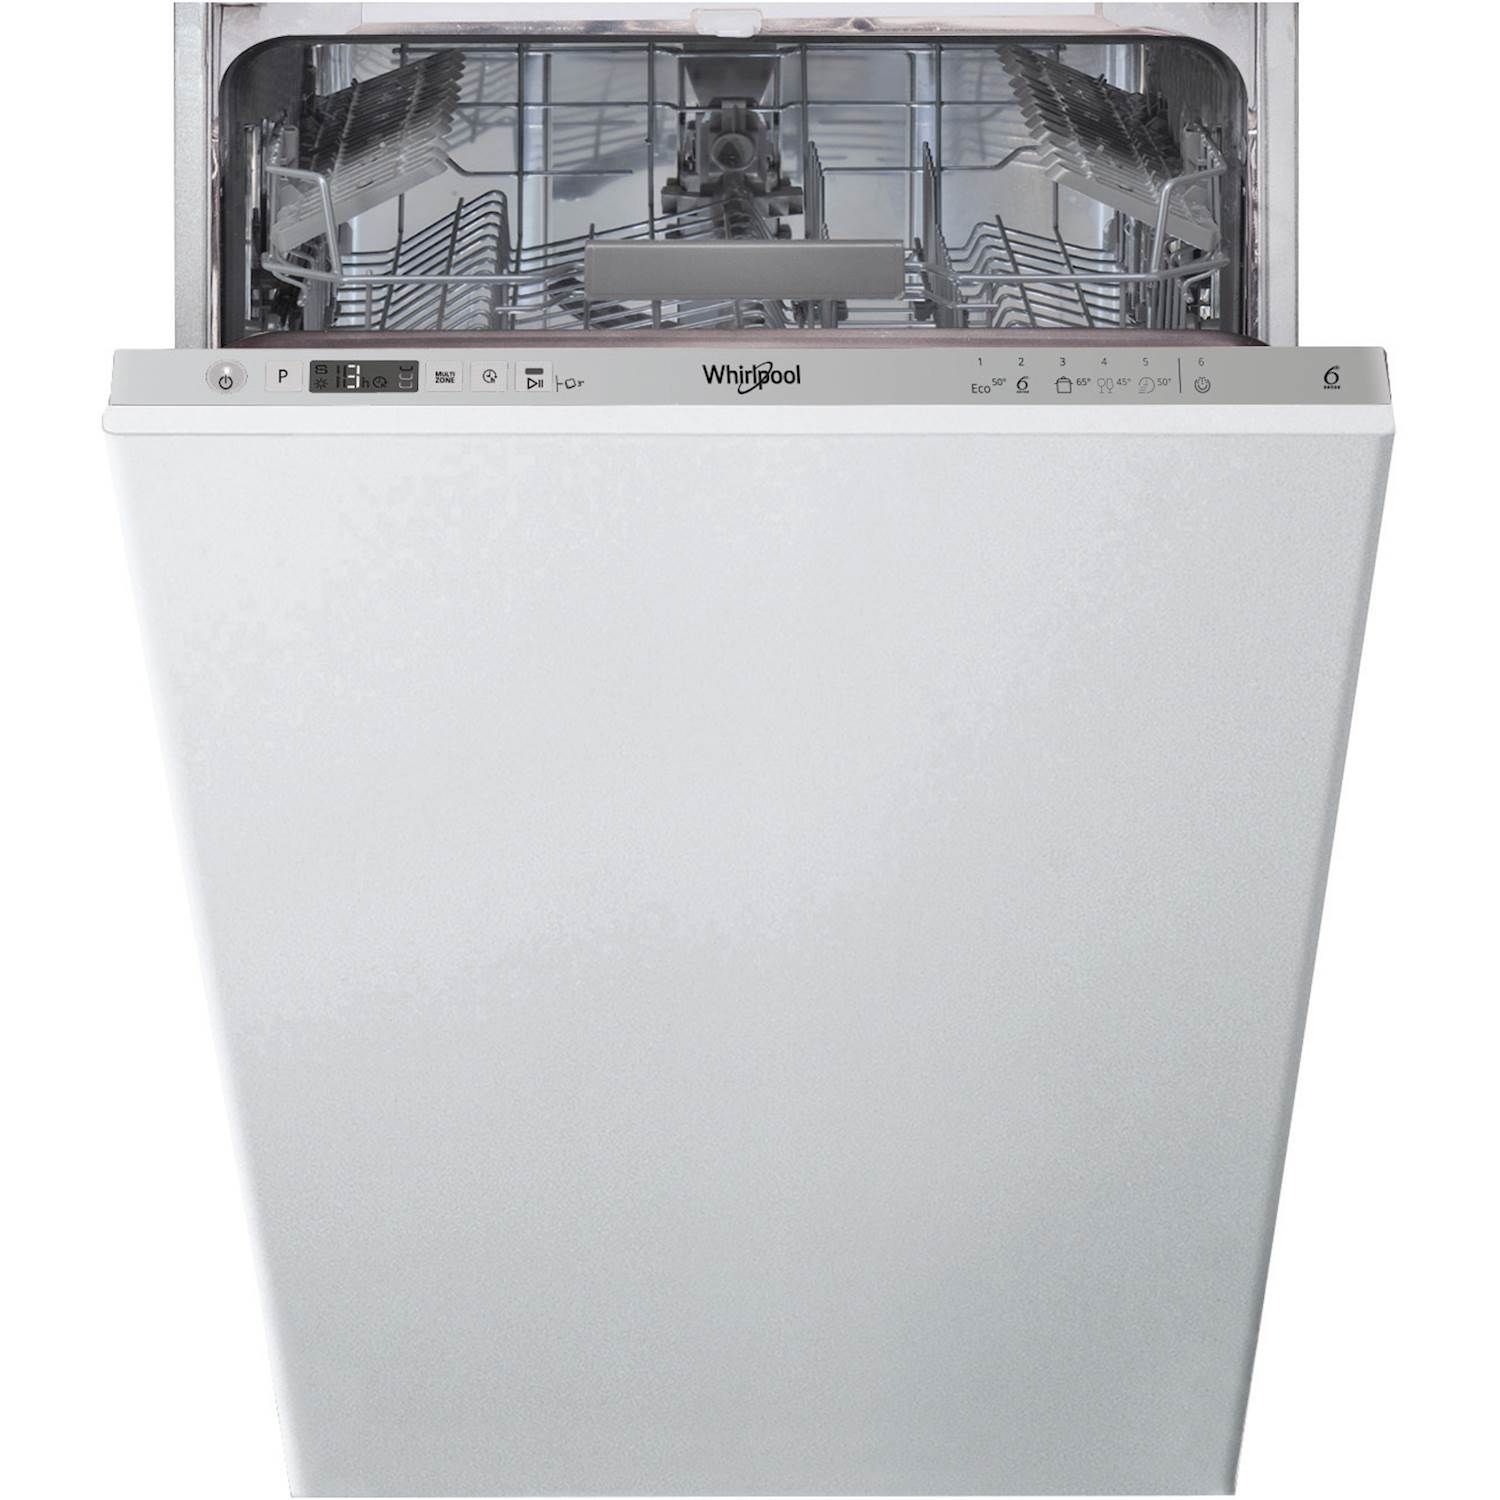 Uganda Tilsvarende fodspor Whirlpool Integrerbar opvaskemaskine WSIC 3M17 - Laasby A/S